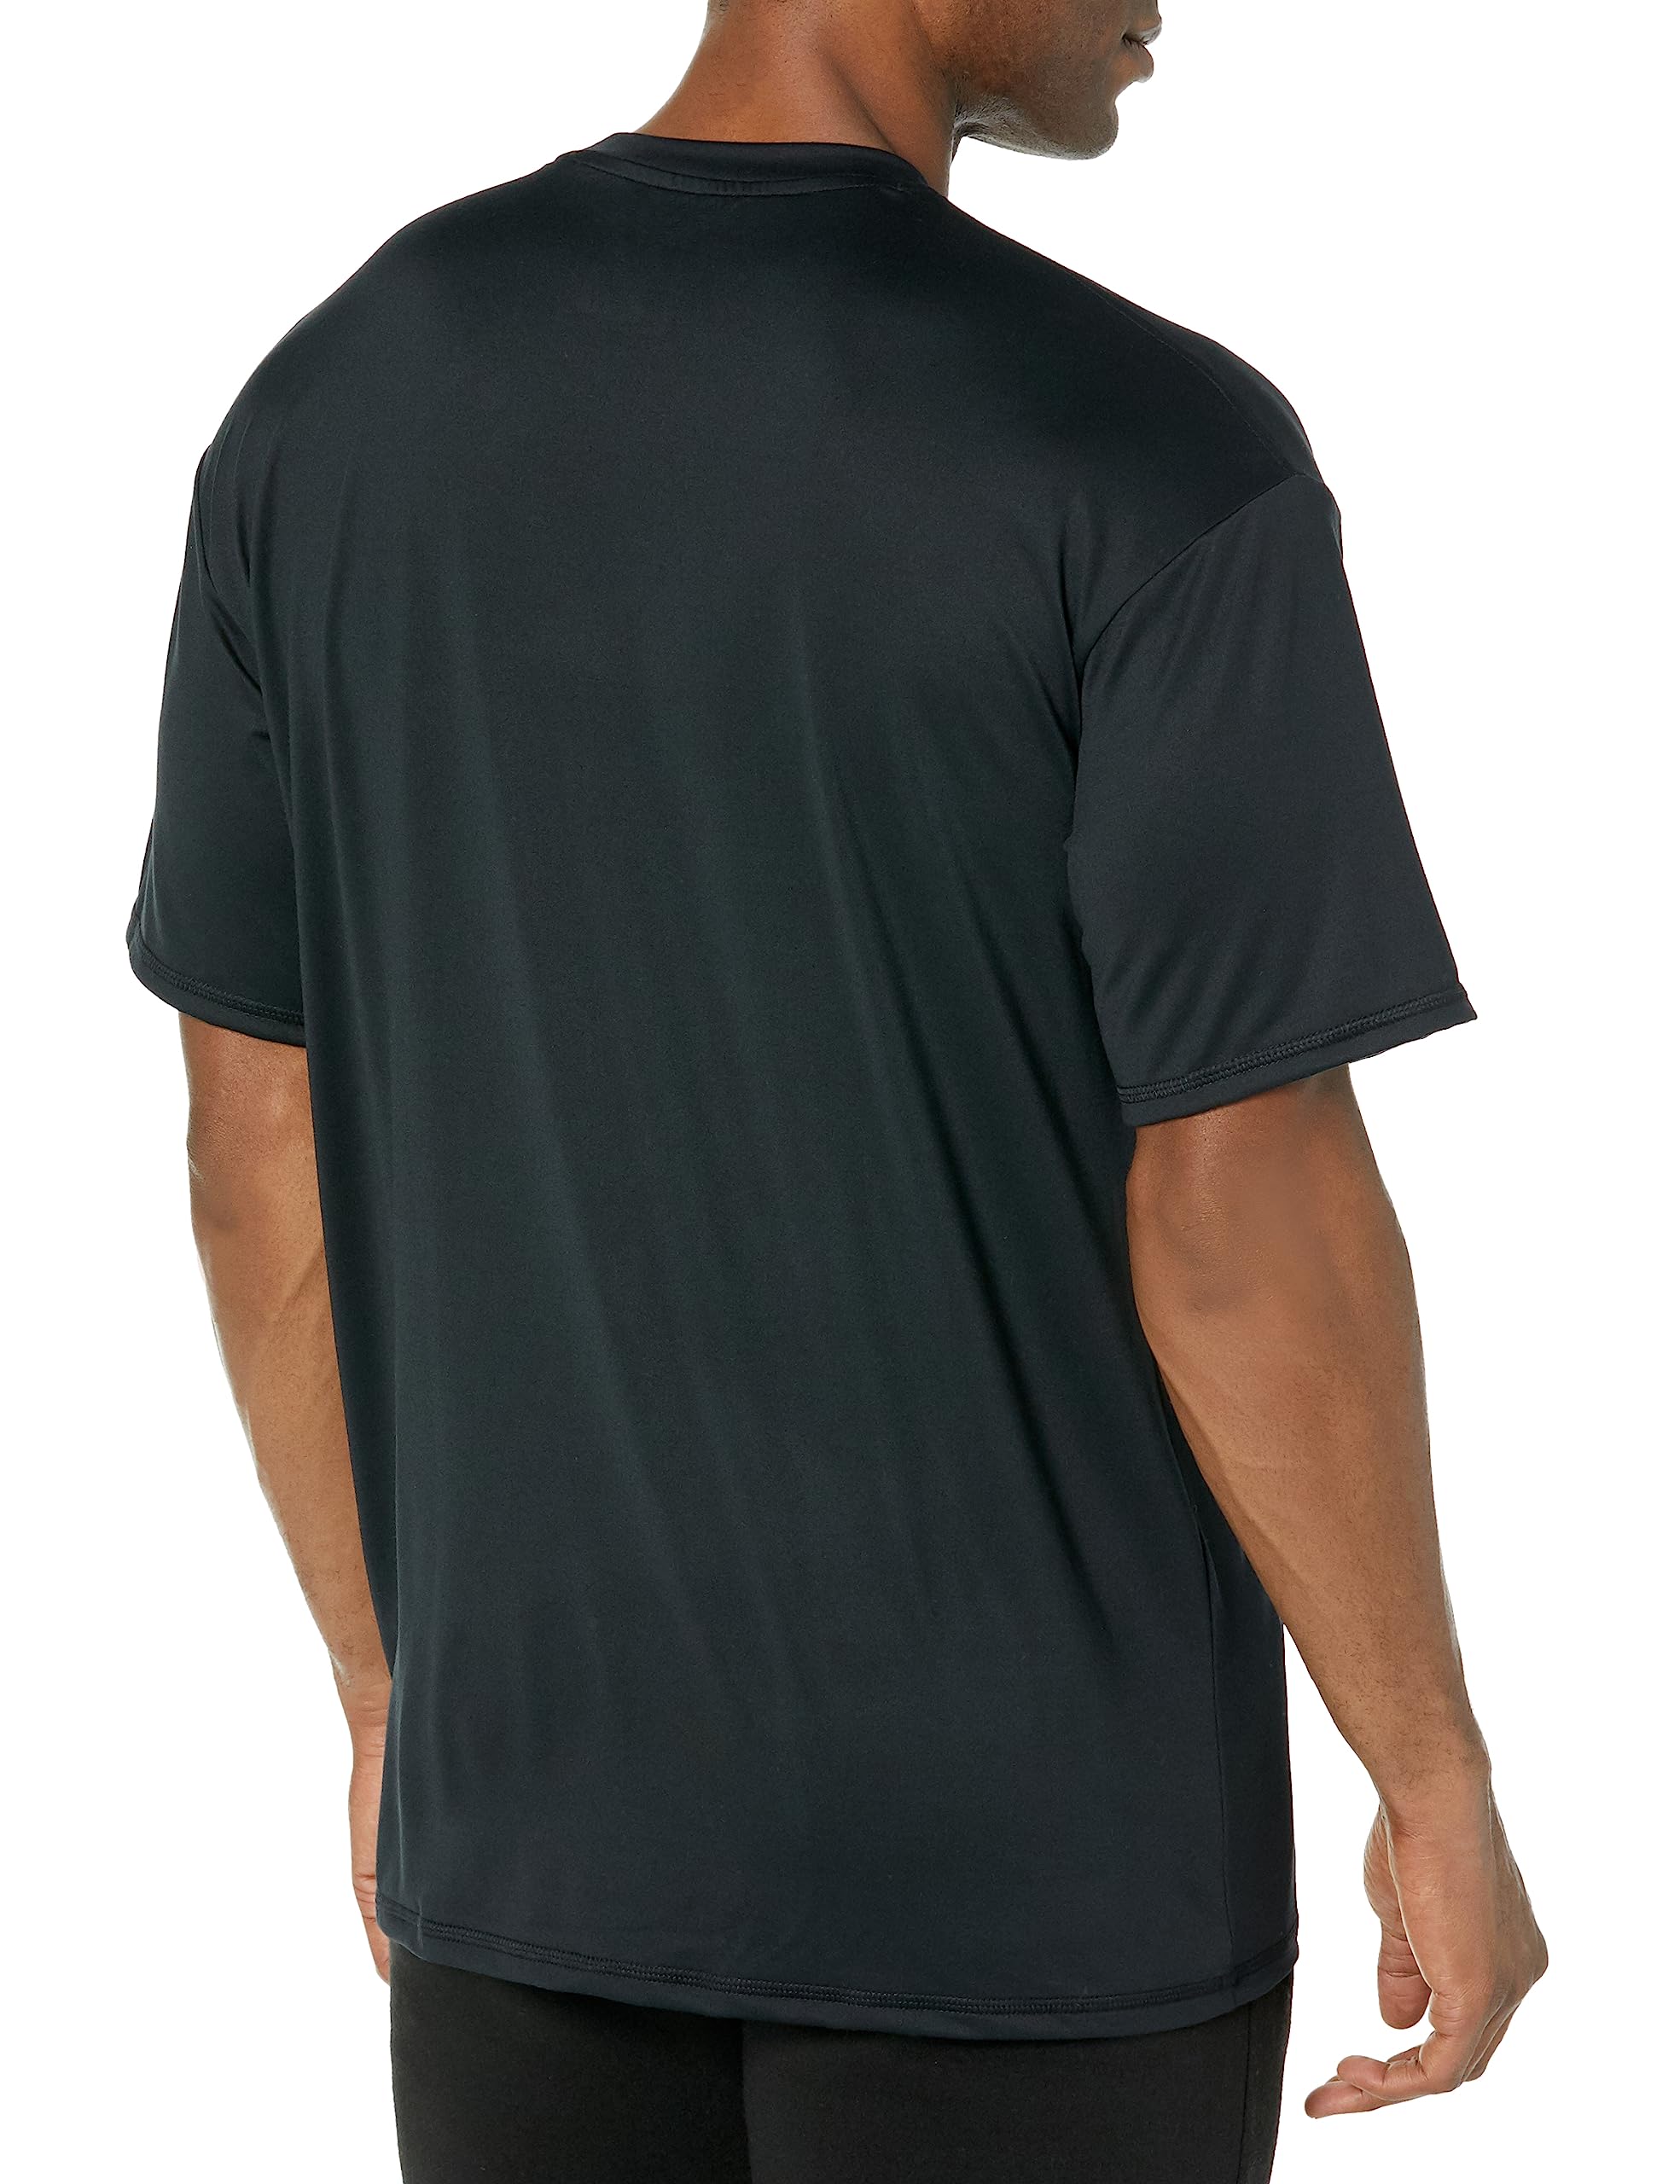 Quiksilver Men's Standard Solid Streak Short Sleeve Rashuguard UPF 50 Sun Protection Surf Shirt